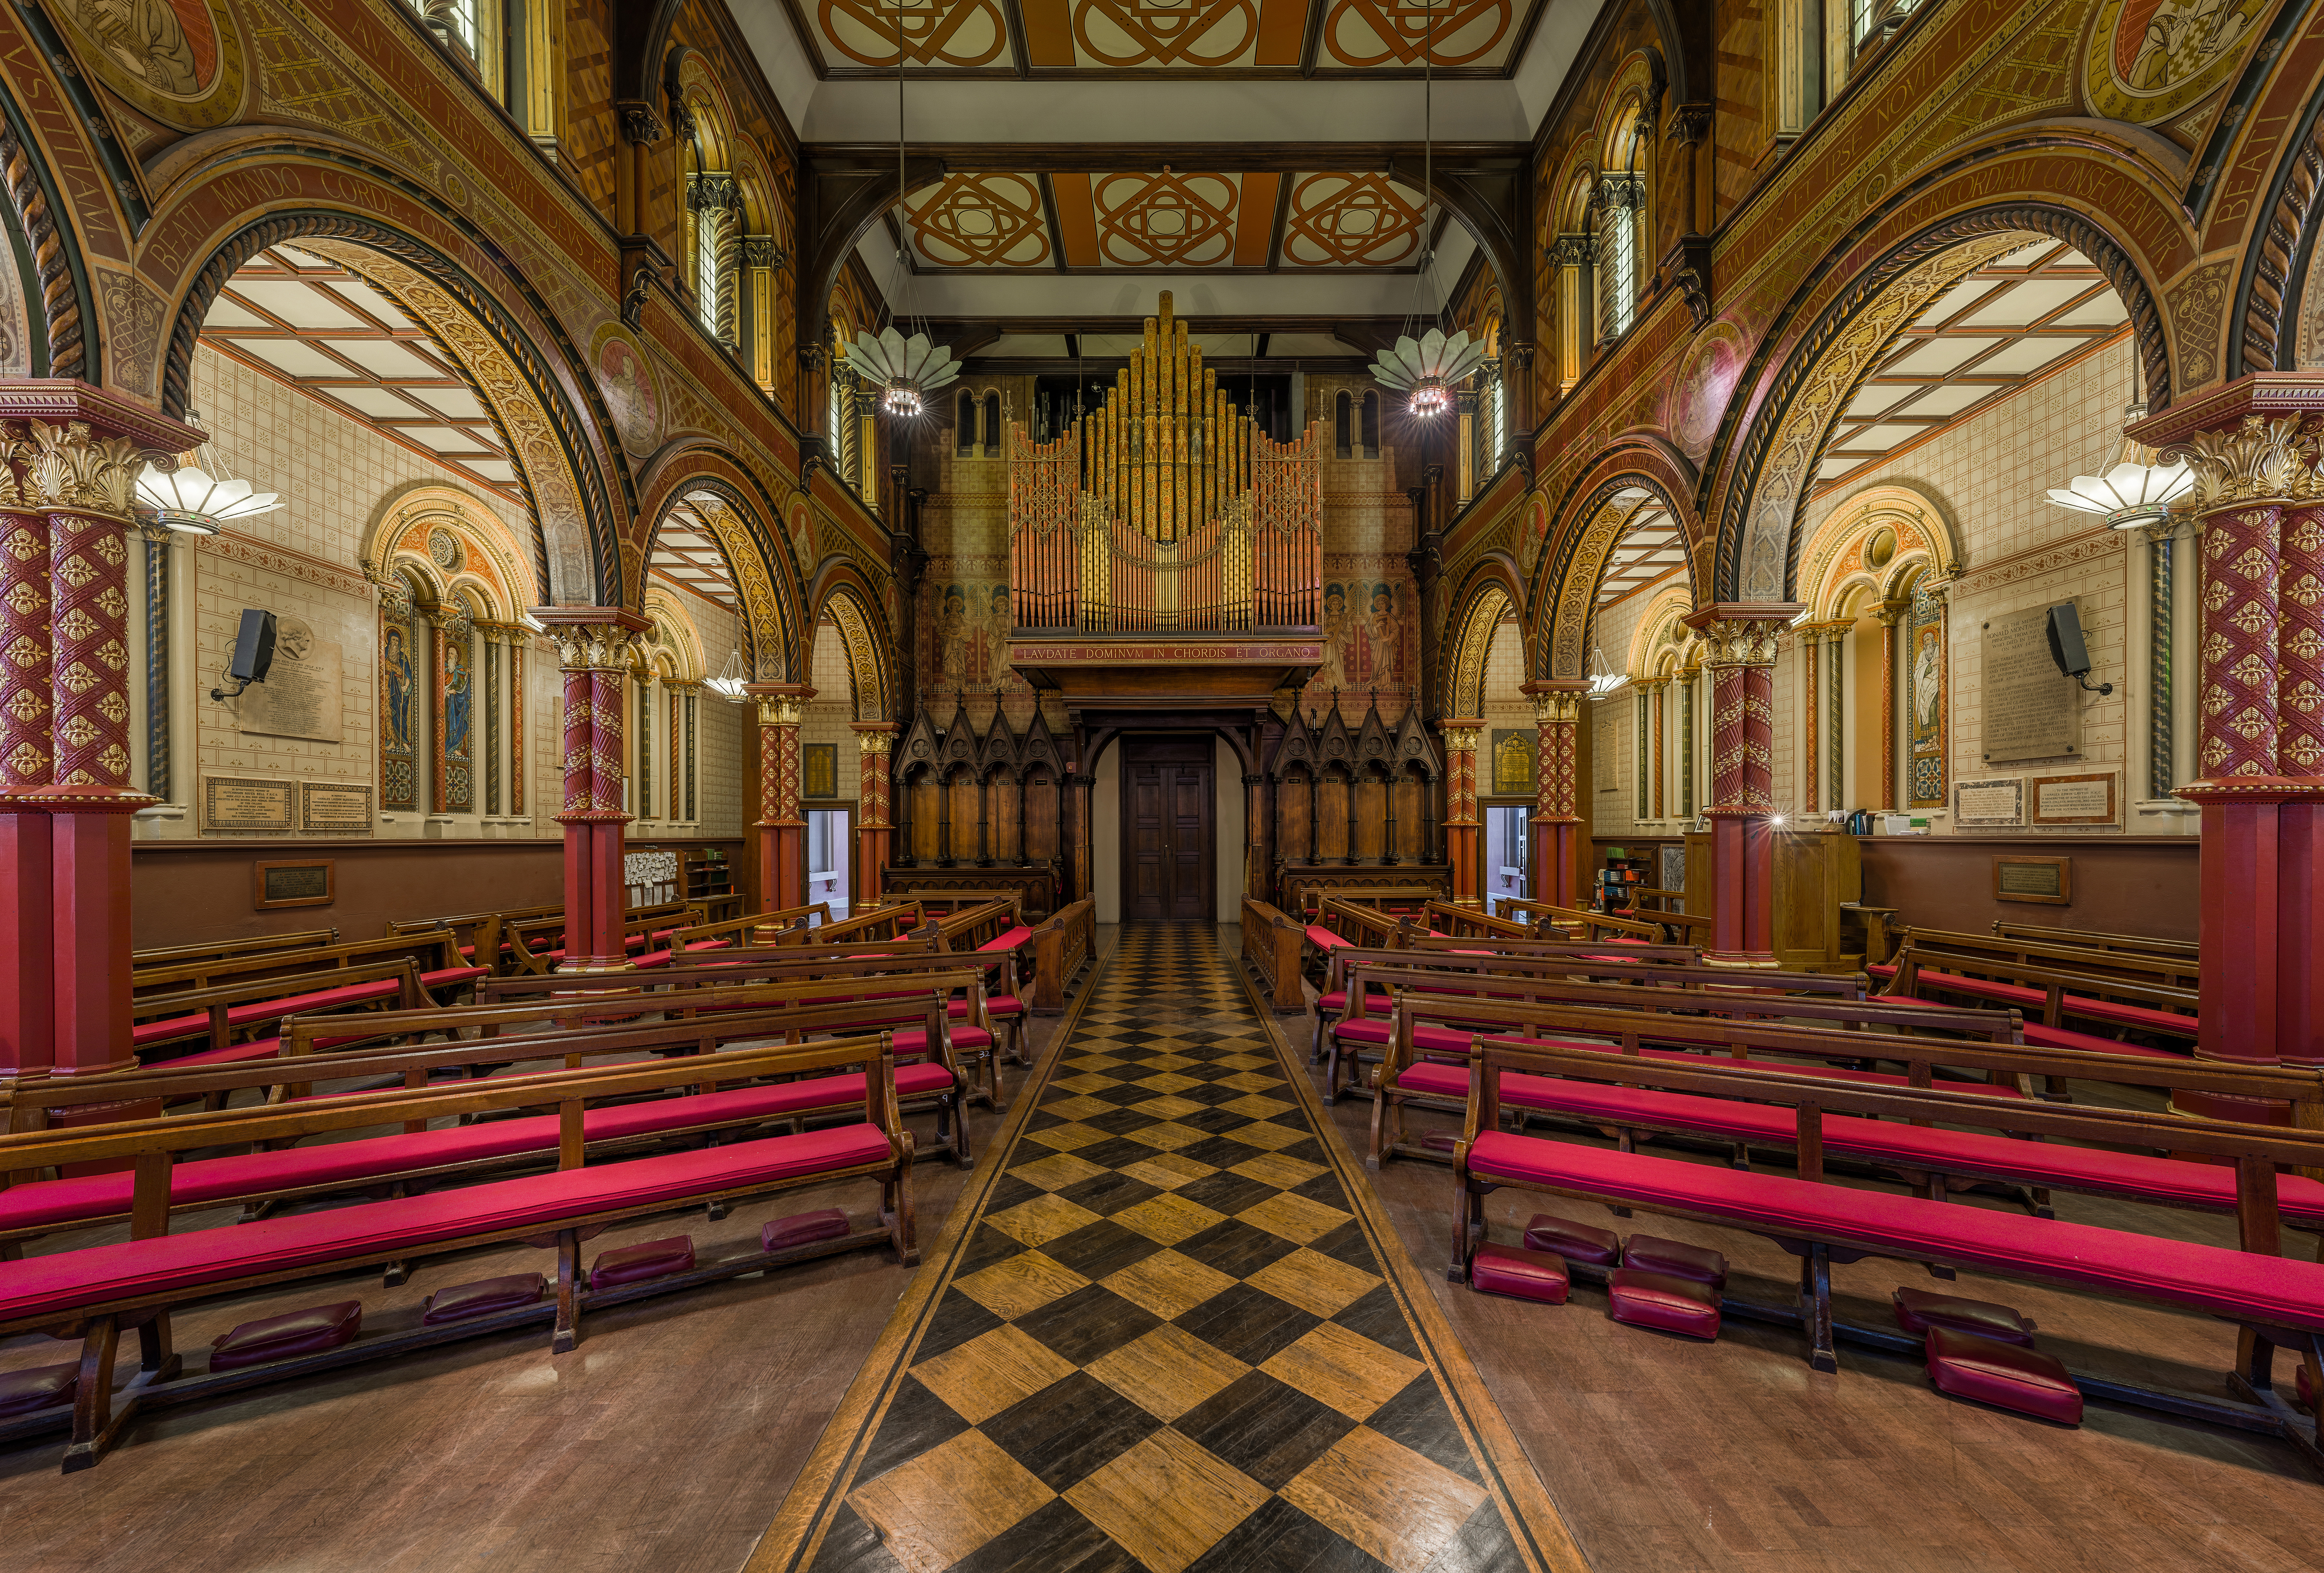 King's College London Chapel - Wikipedia